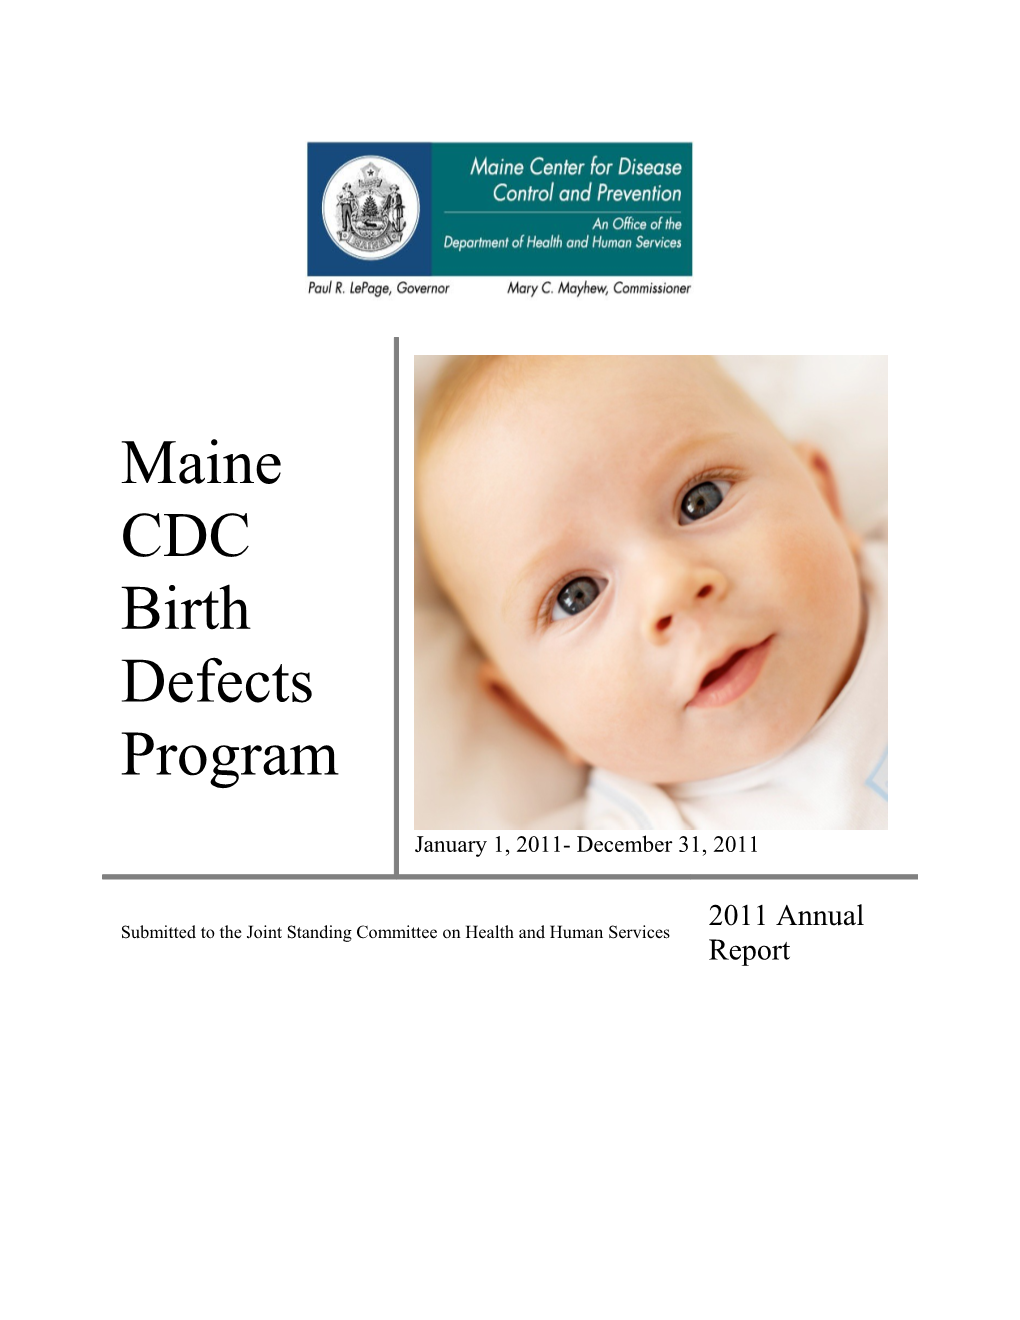 Maine Birth Defects Program